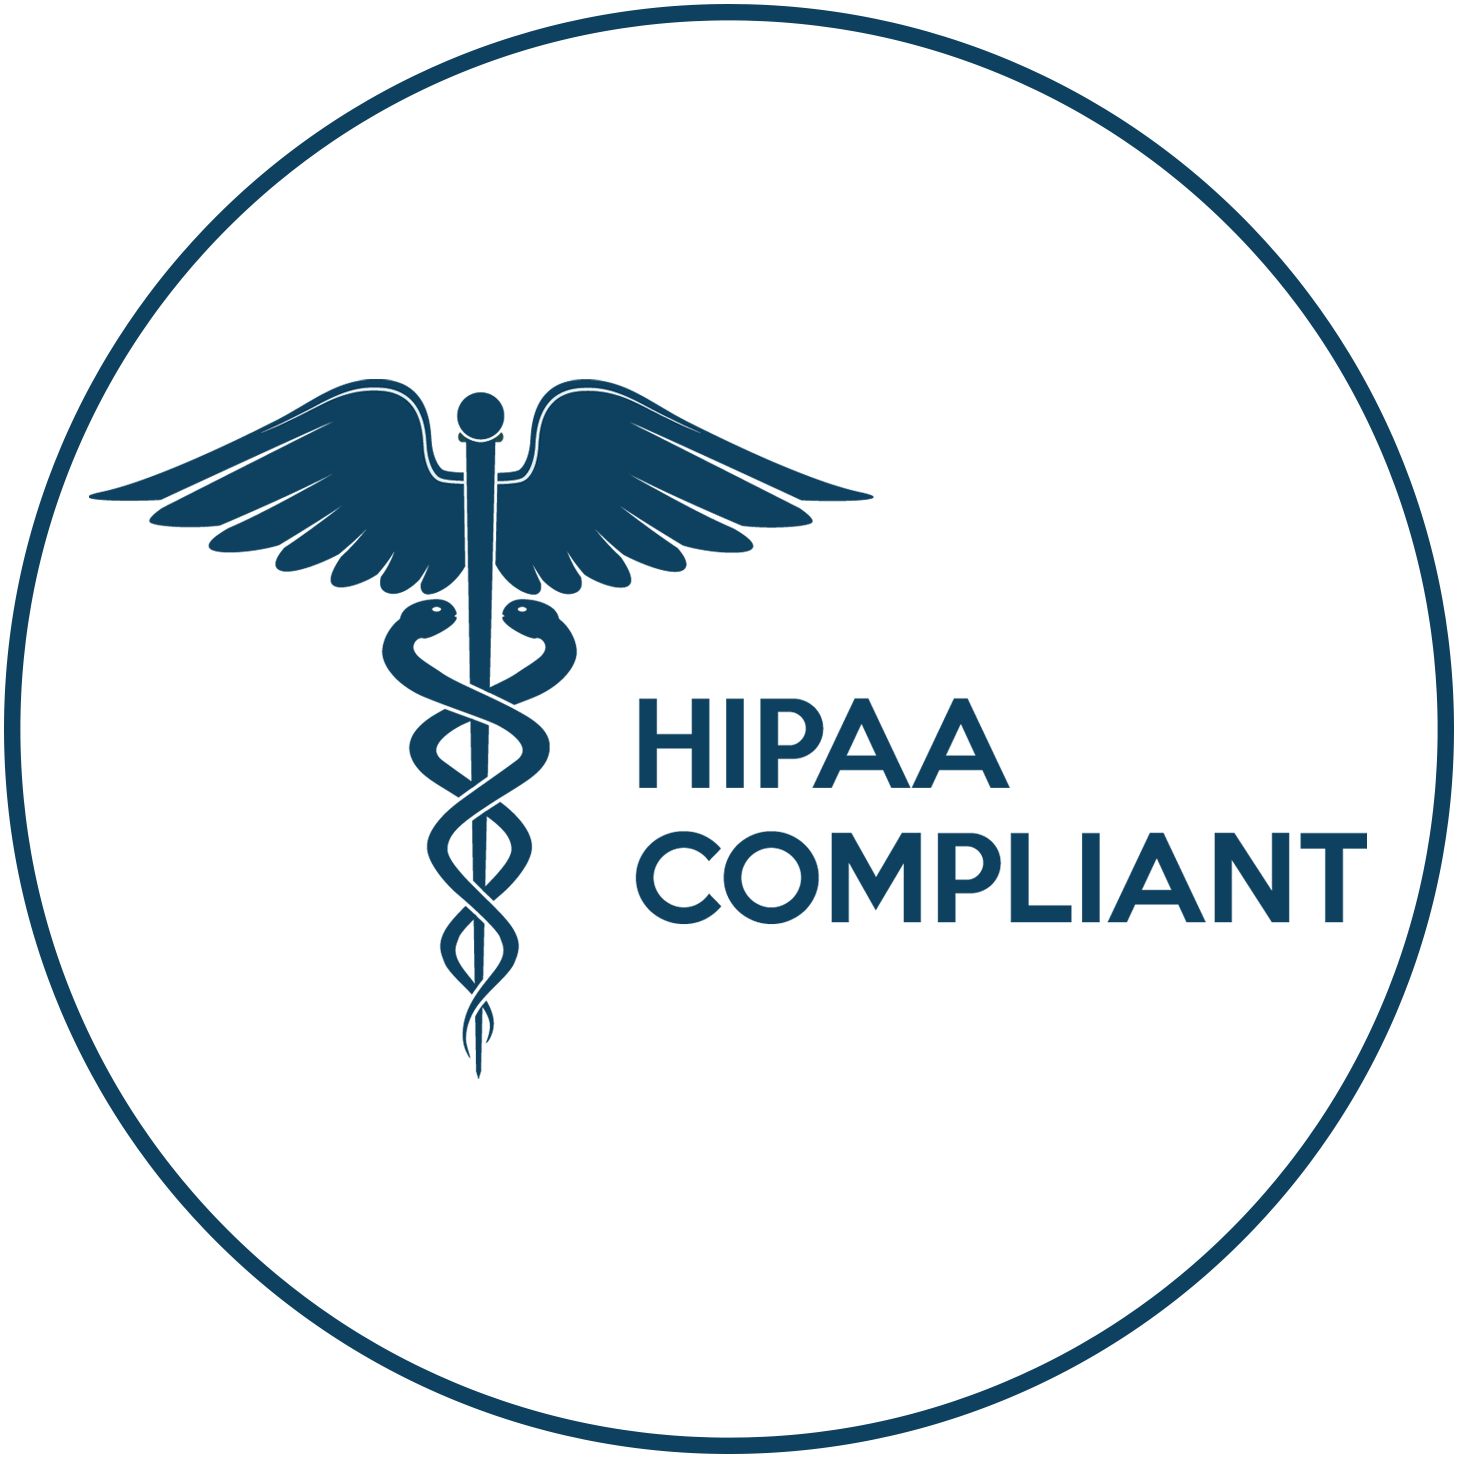 HIPAA-Compliant-Logo 1x1.png